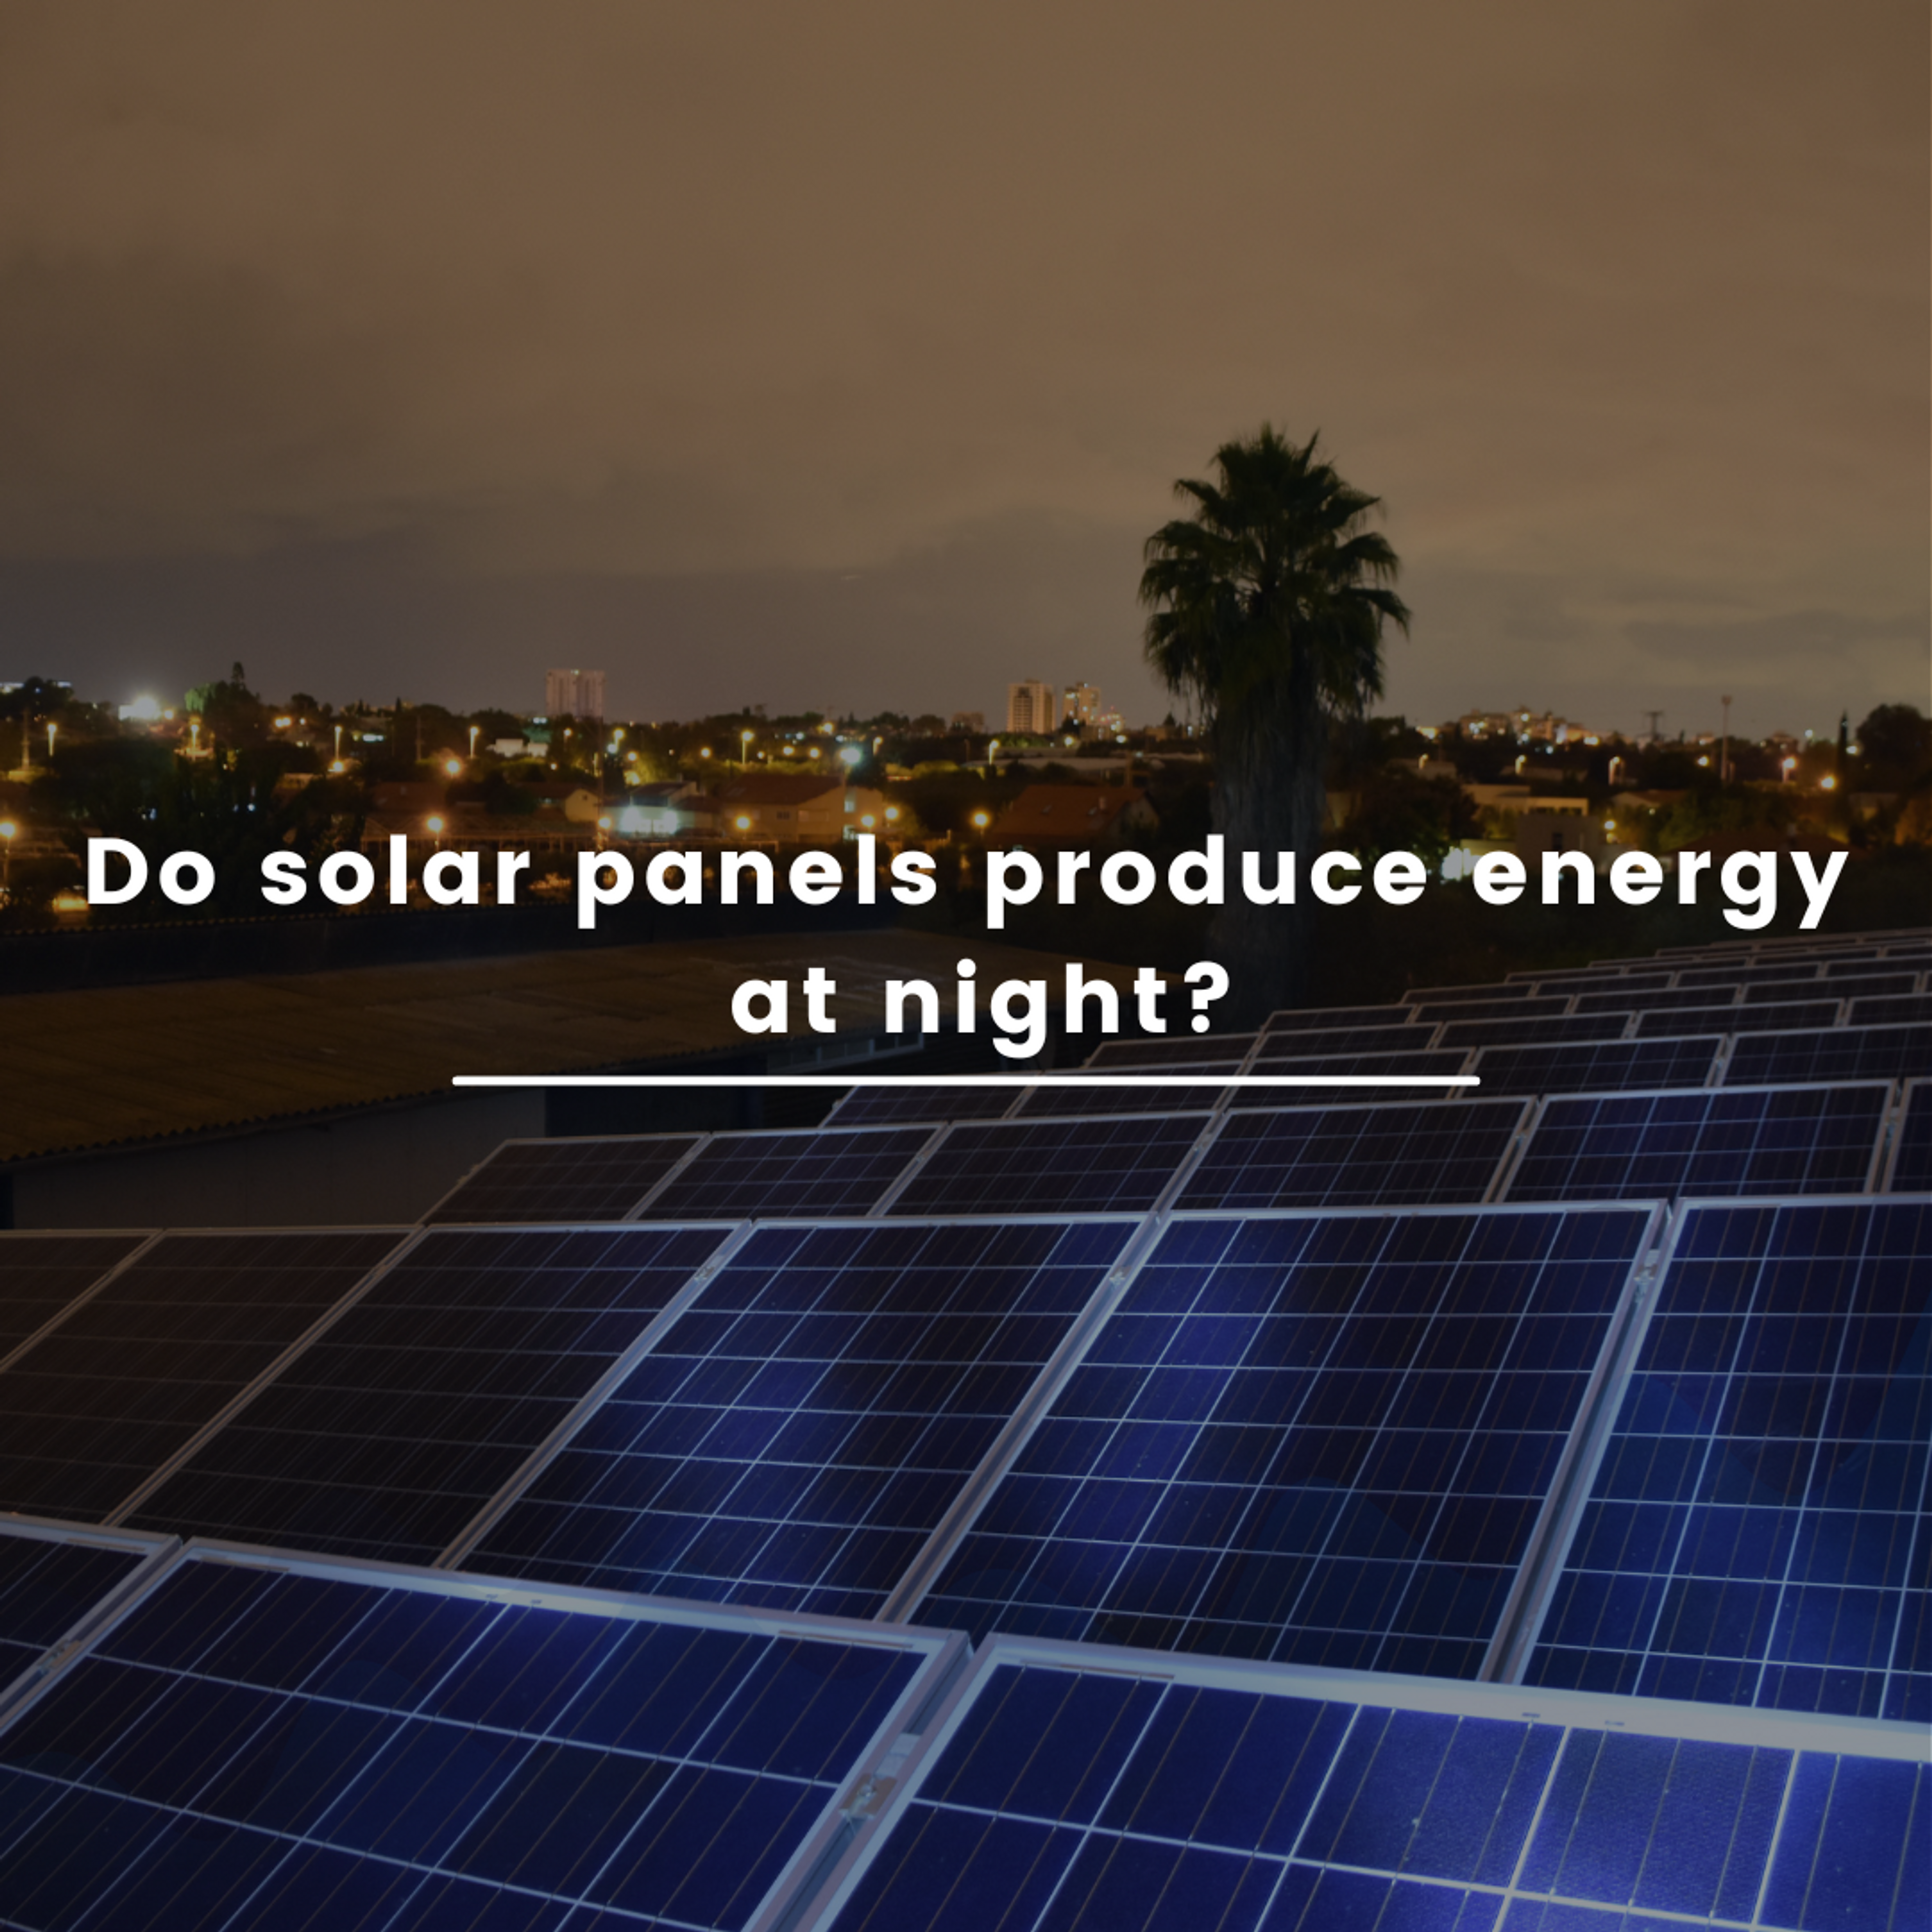 Do solar panels produce energy at night?